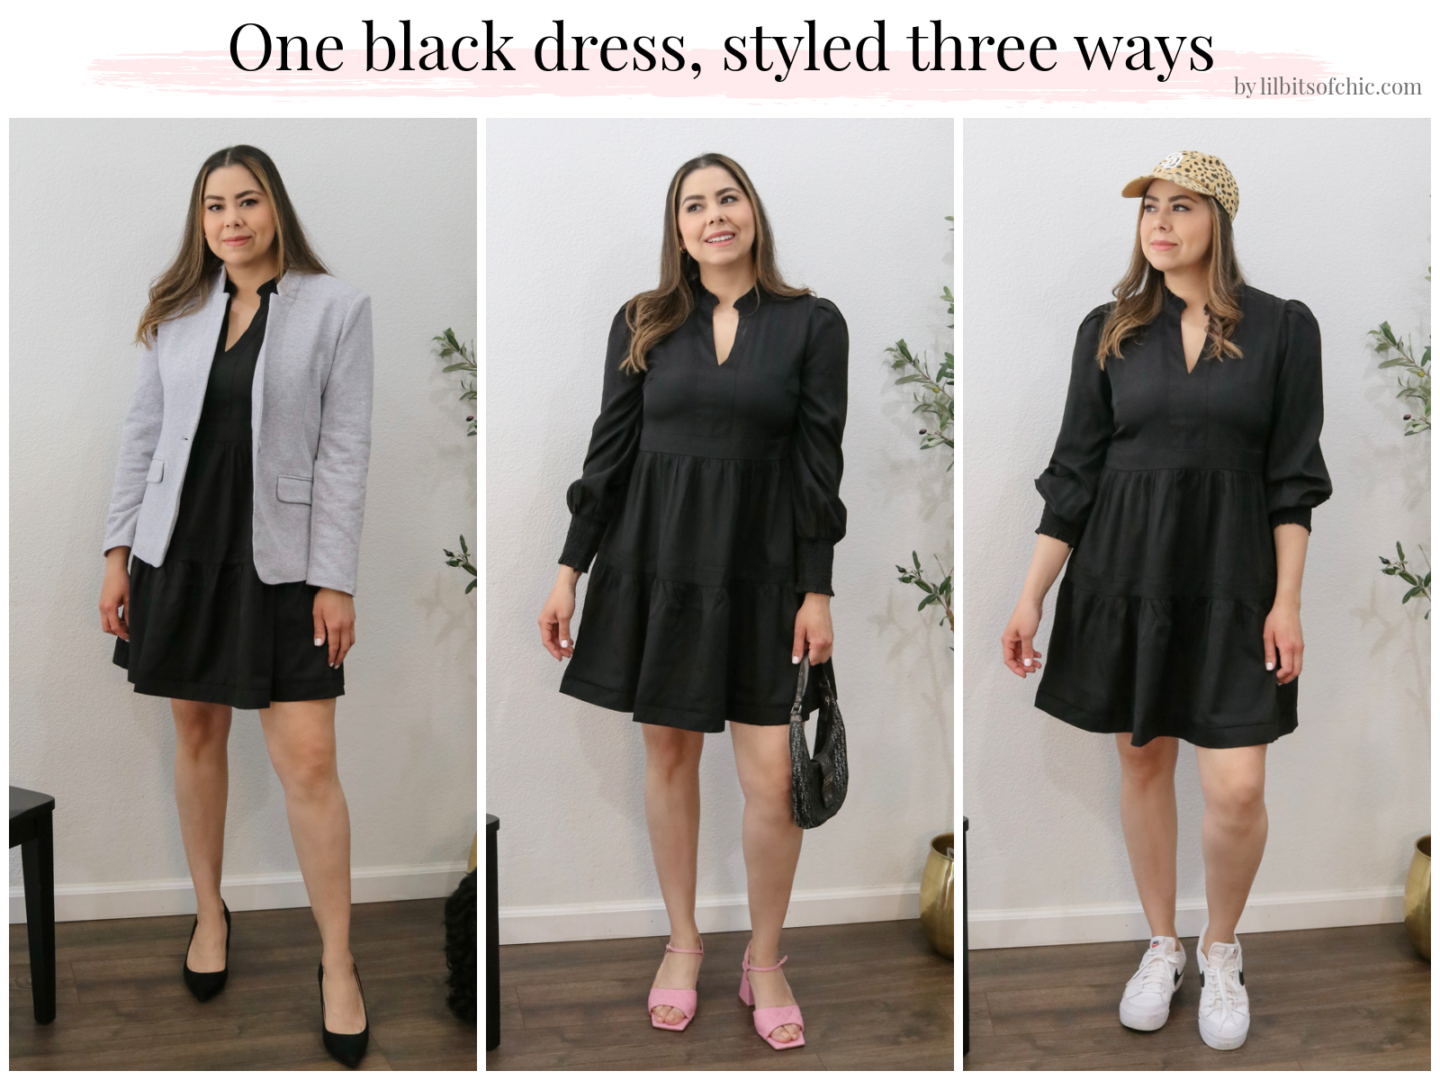 One Spring Black Dress Styled Three Ways